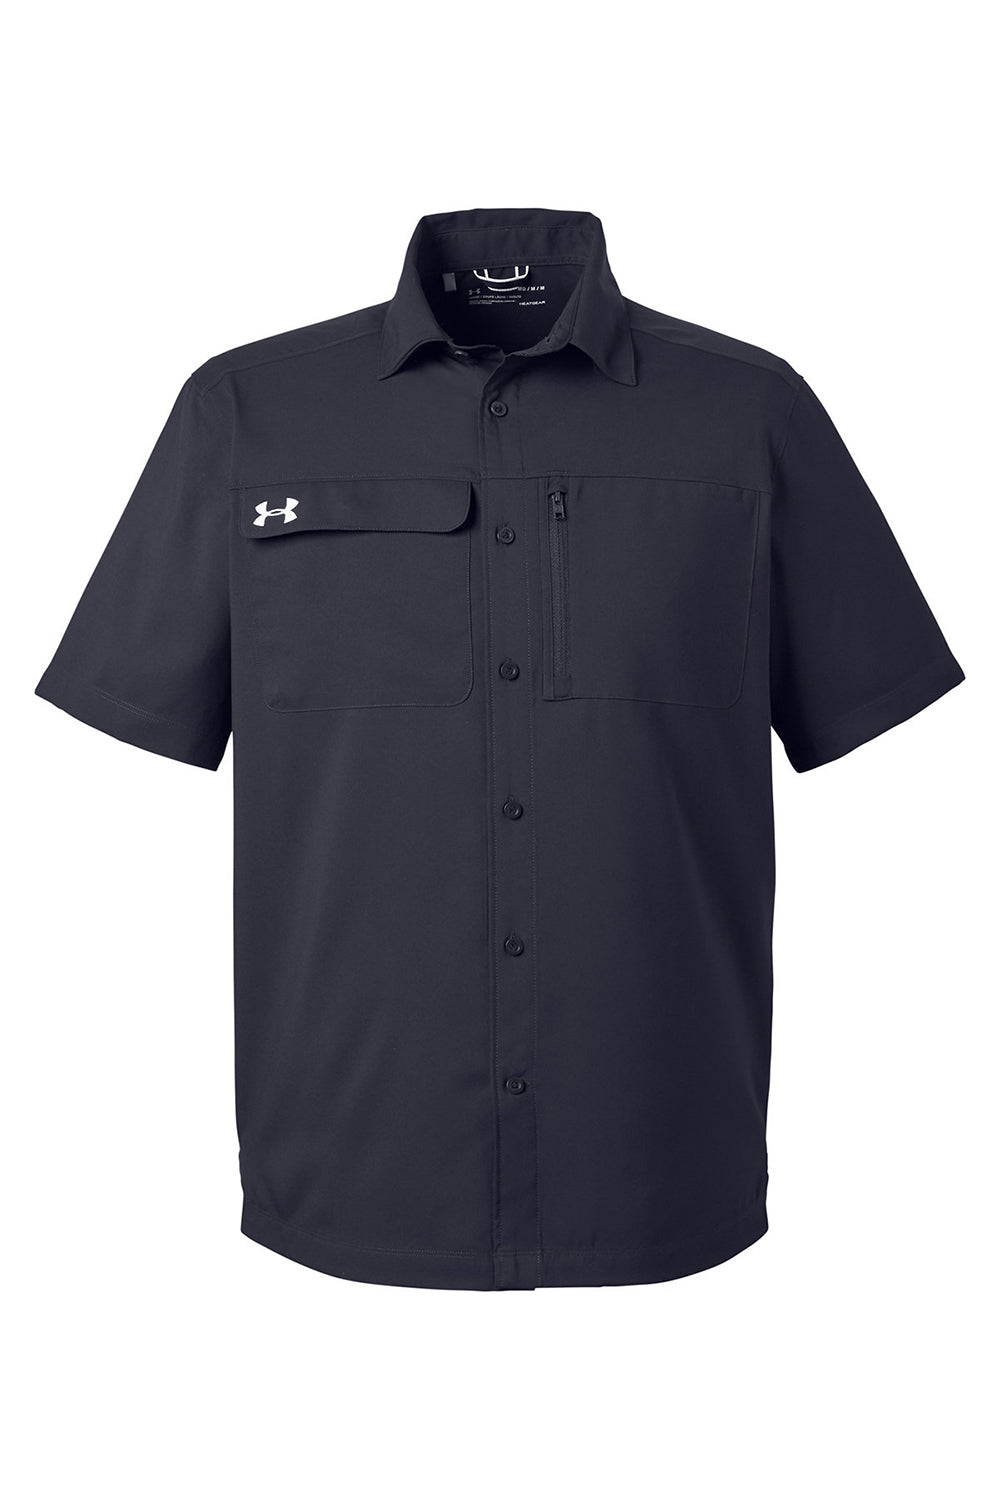 Under Armour 1351360 Mens Motivate Moisture Wicking Short Sleeve Button Down Shirt w/ Pocket Black Flat Front